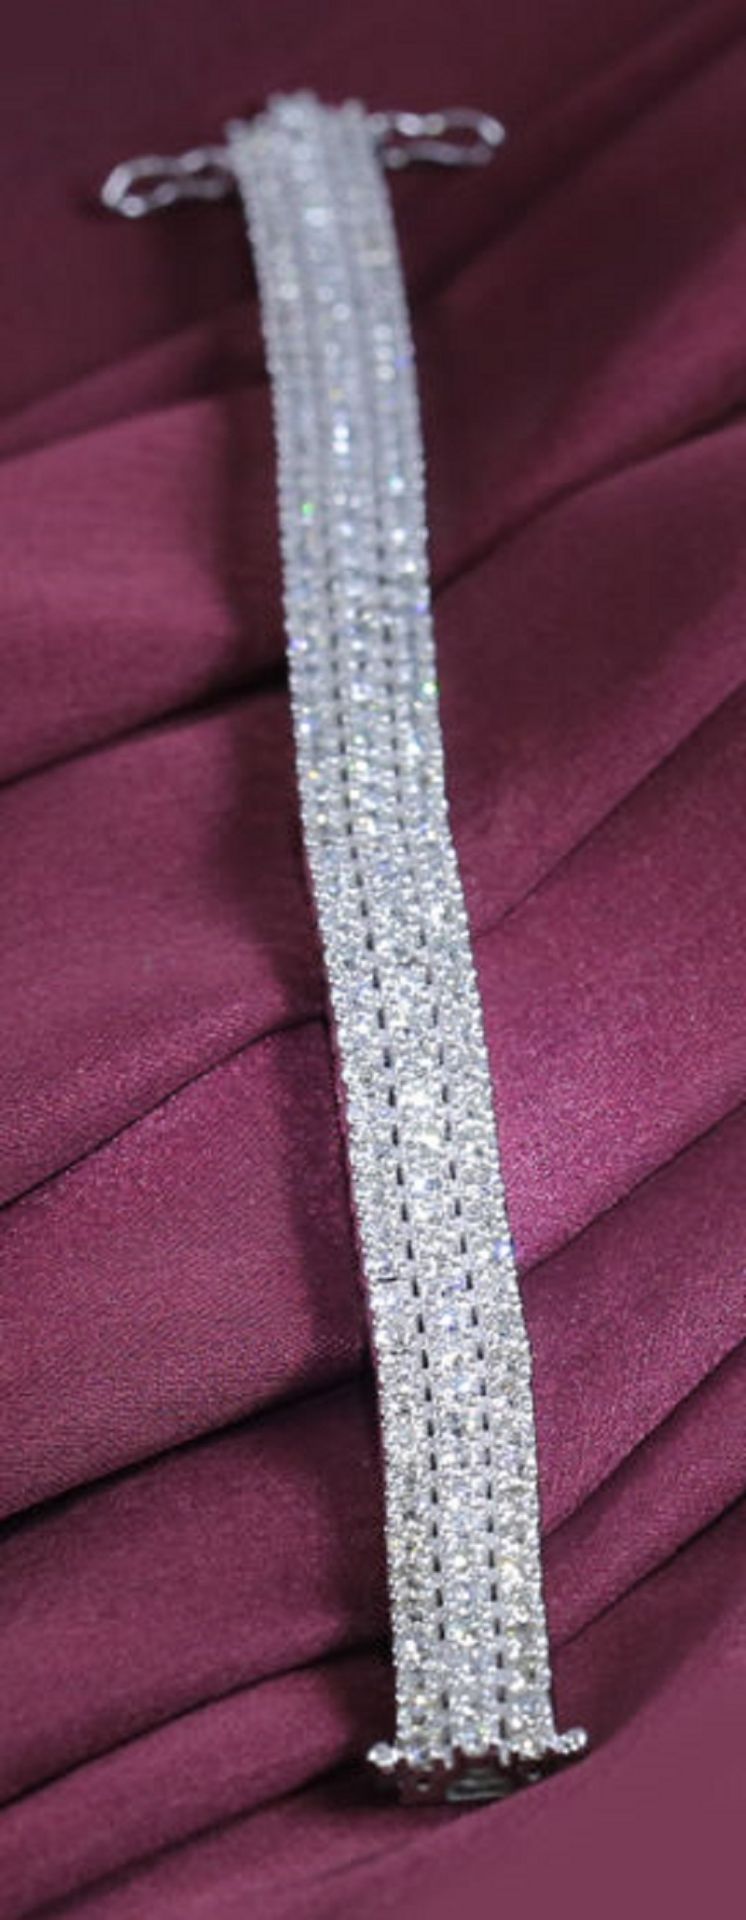 14 K /585 White Gold 3 Line Tennis Bracelet with 12.30 ct. Diamonds - Image 5 of 6